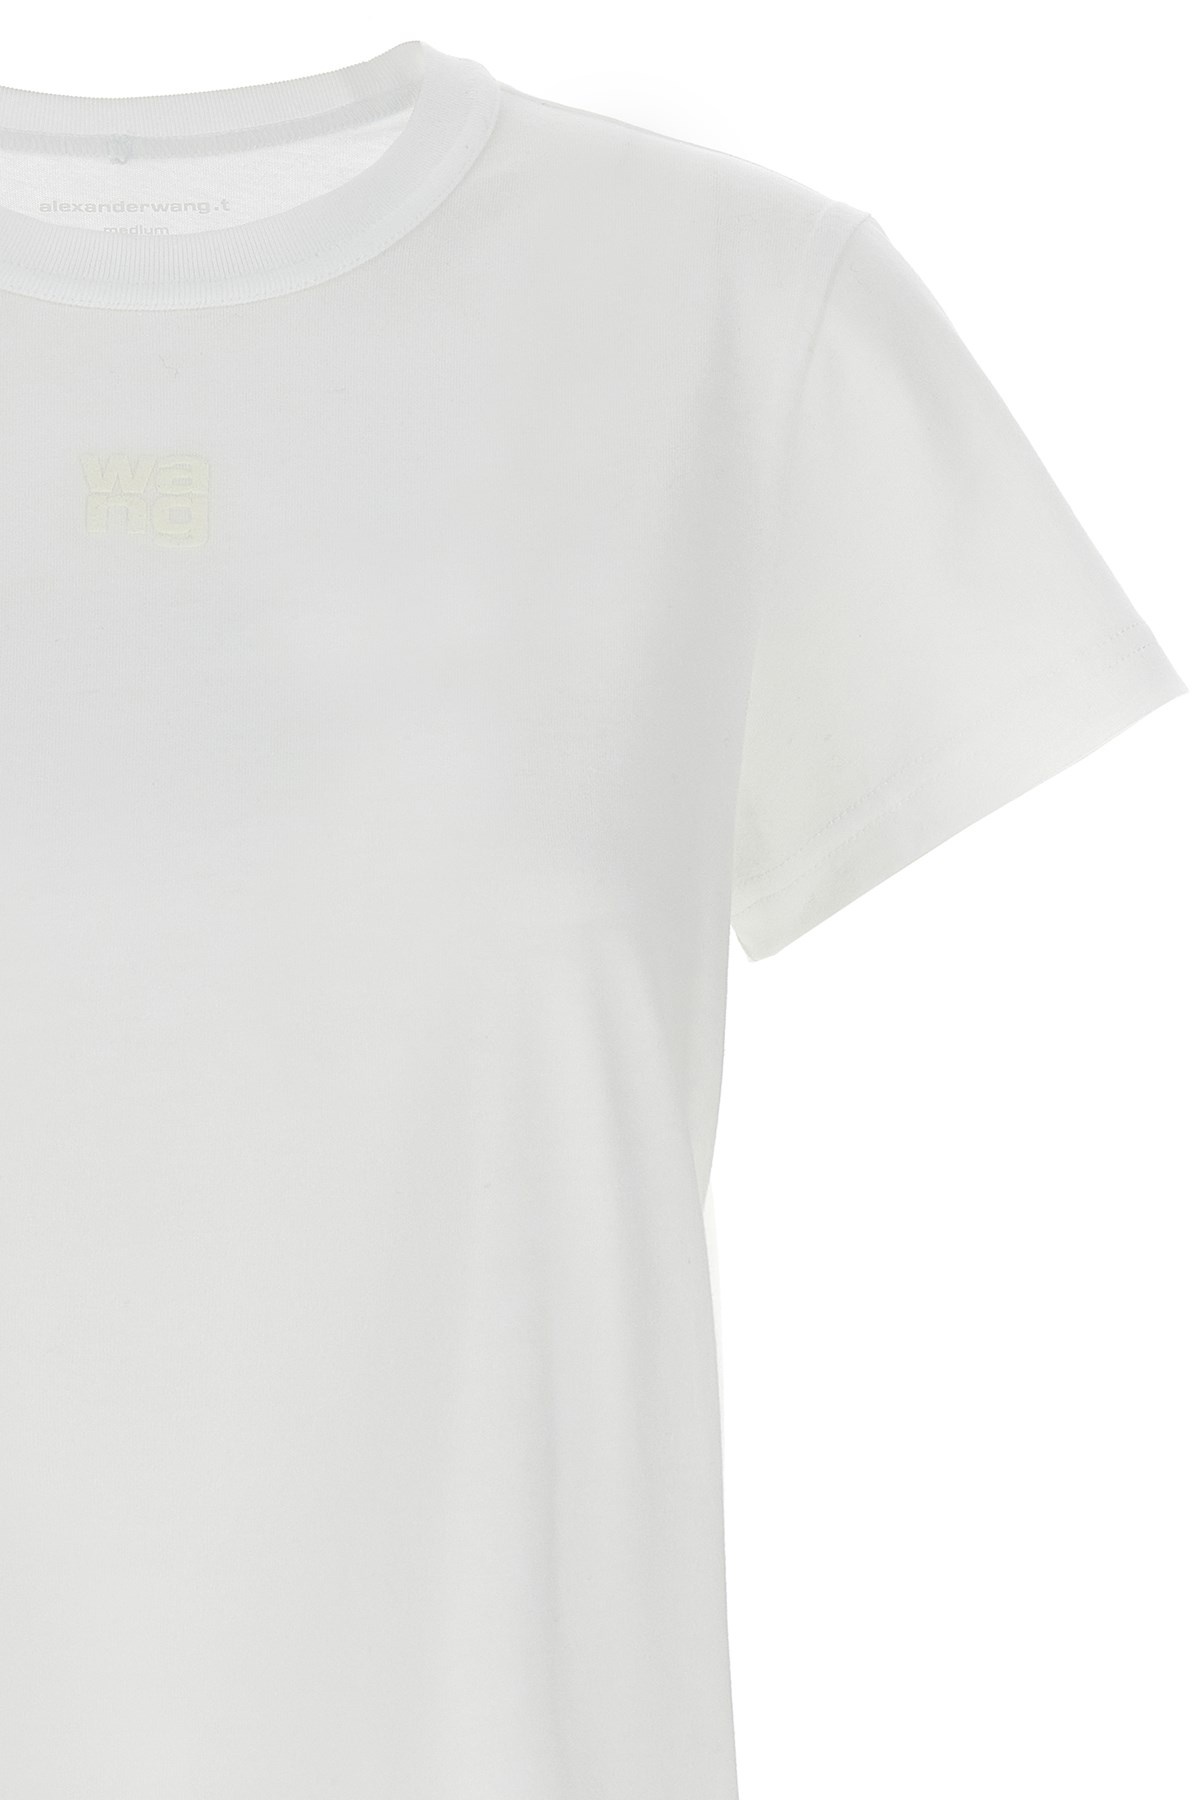 'Essential JSY Shrunk' T-shirt - 4